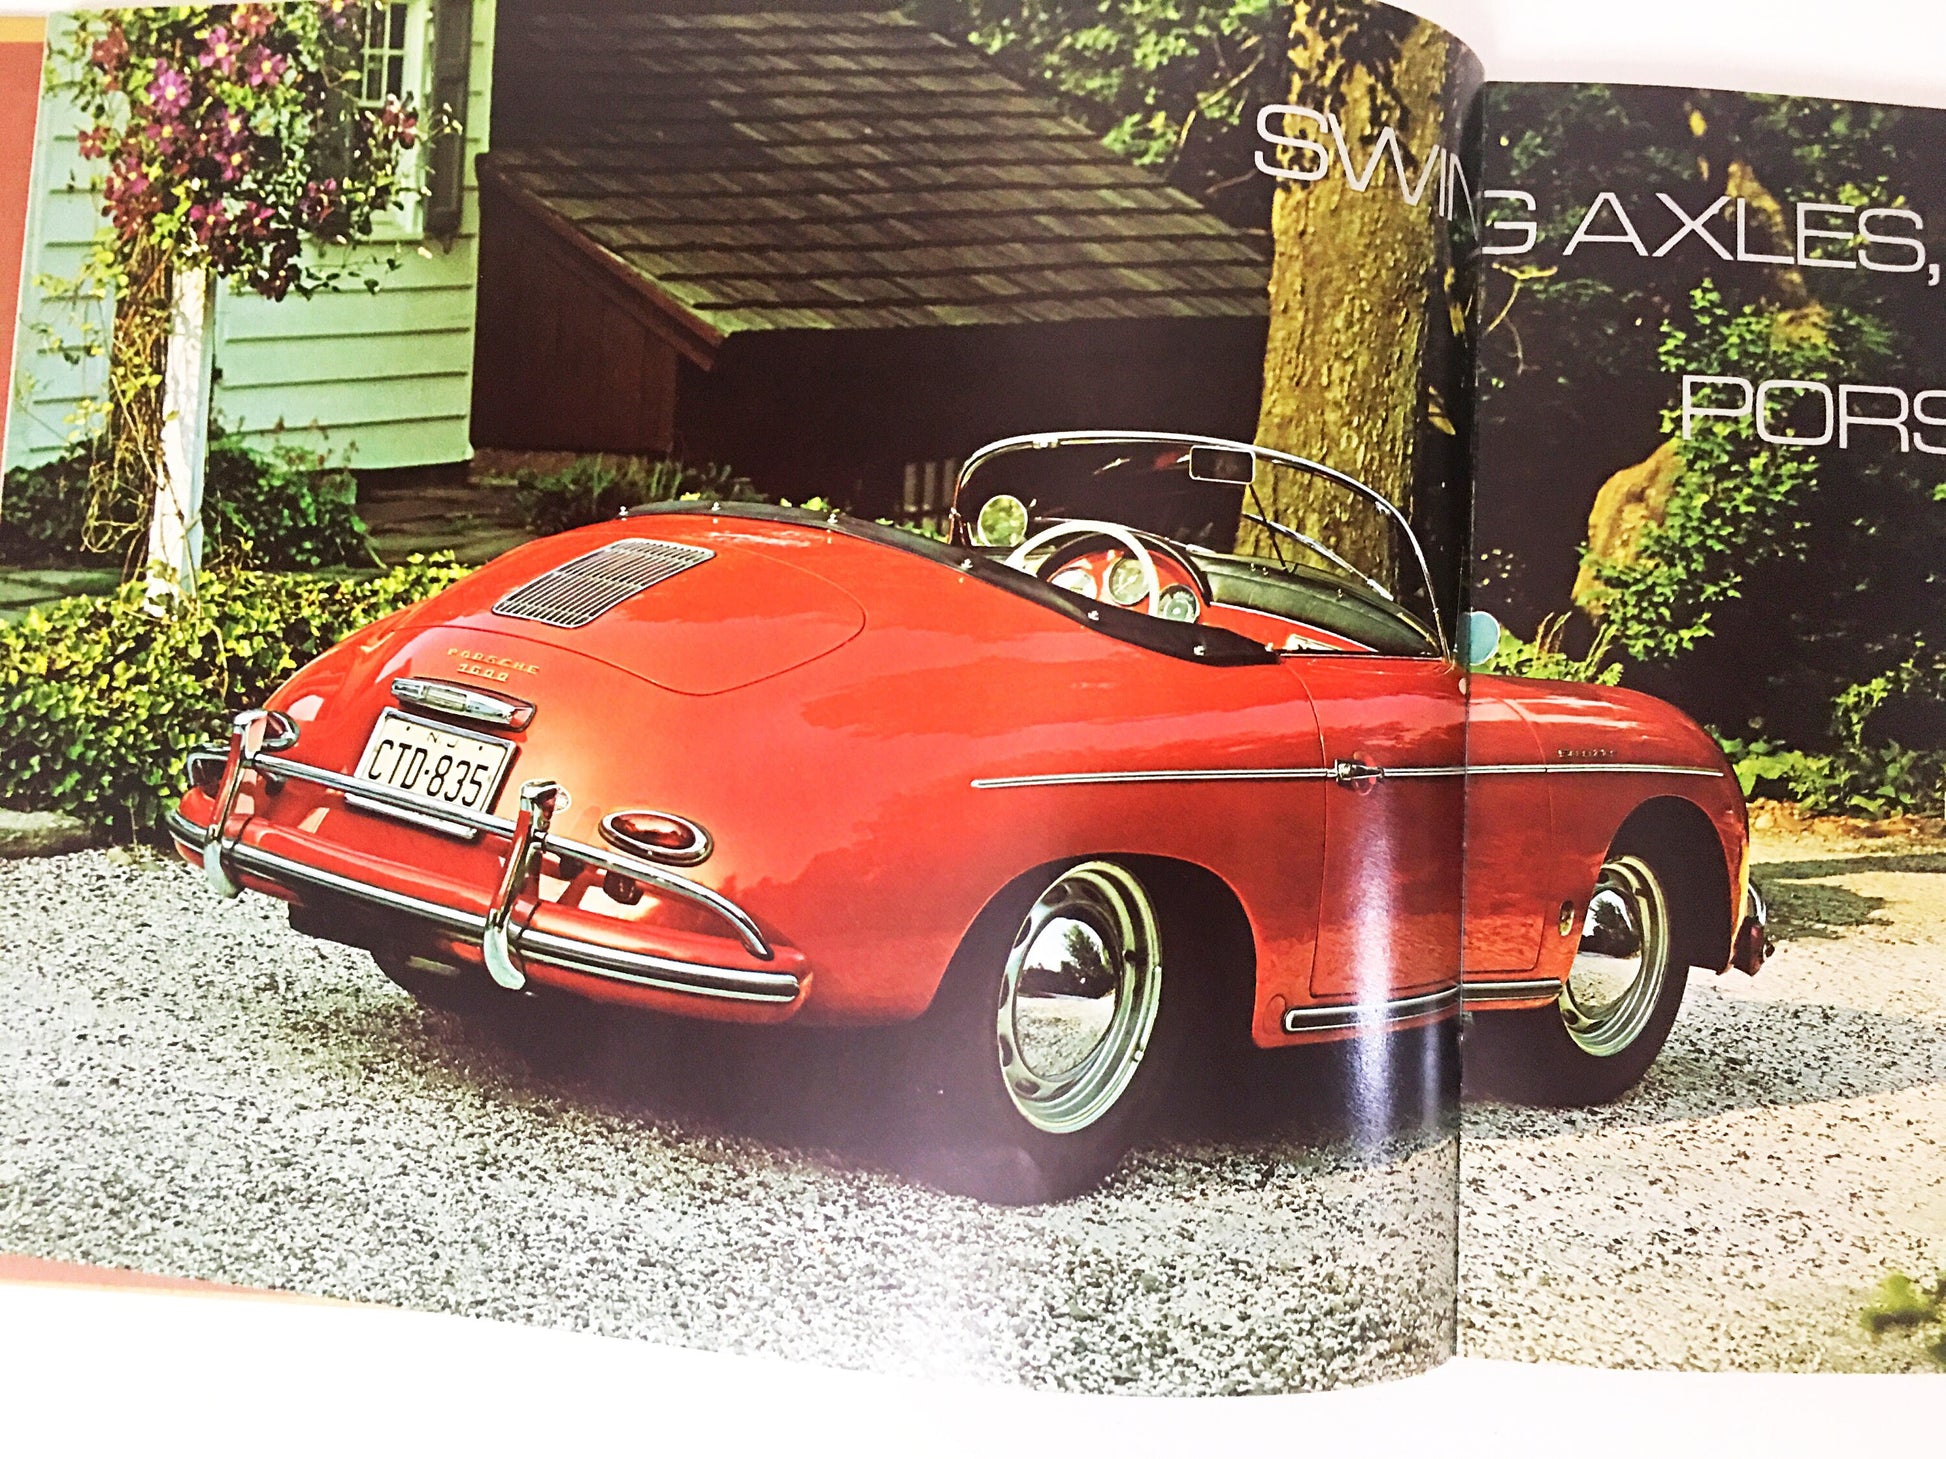 1976 vintage hardcover book about Porsche, Camille du Gast, Lincoln, American Austin and Bantam Automobile Quarterly car lover gift.